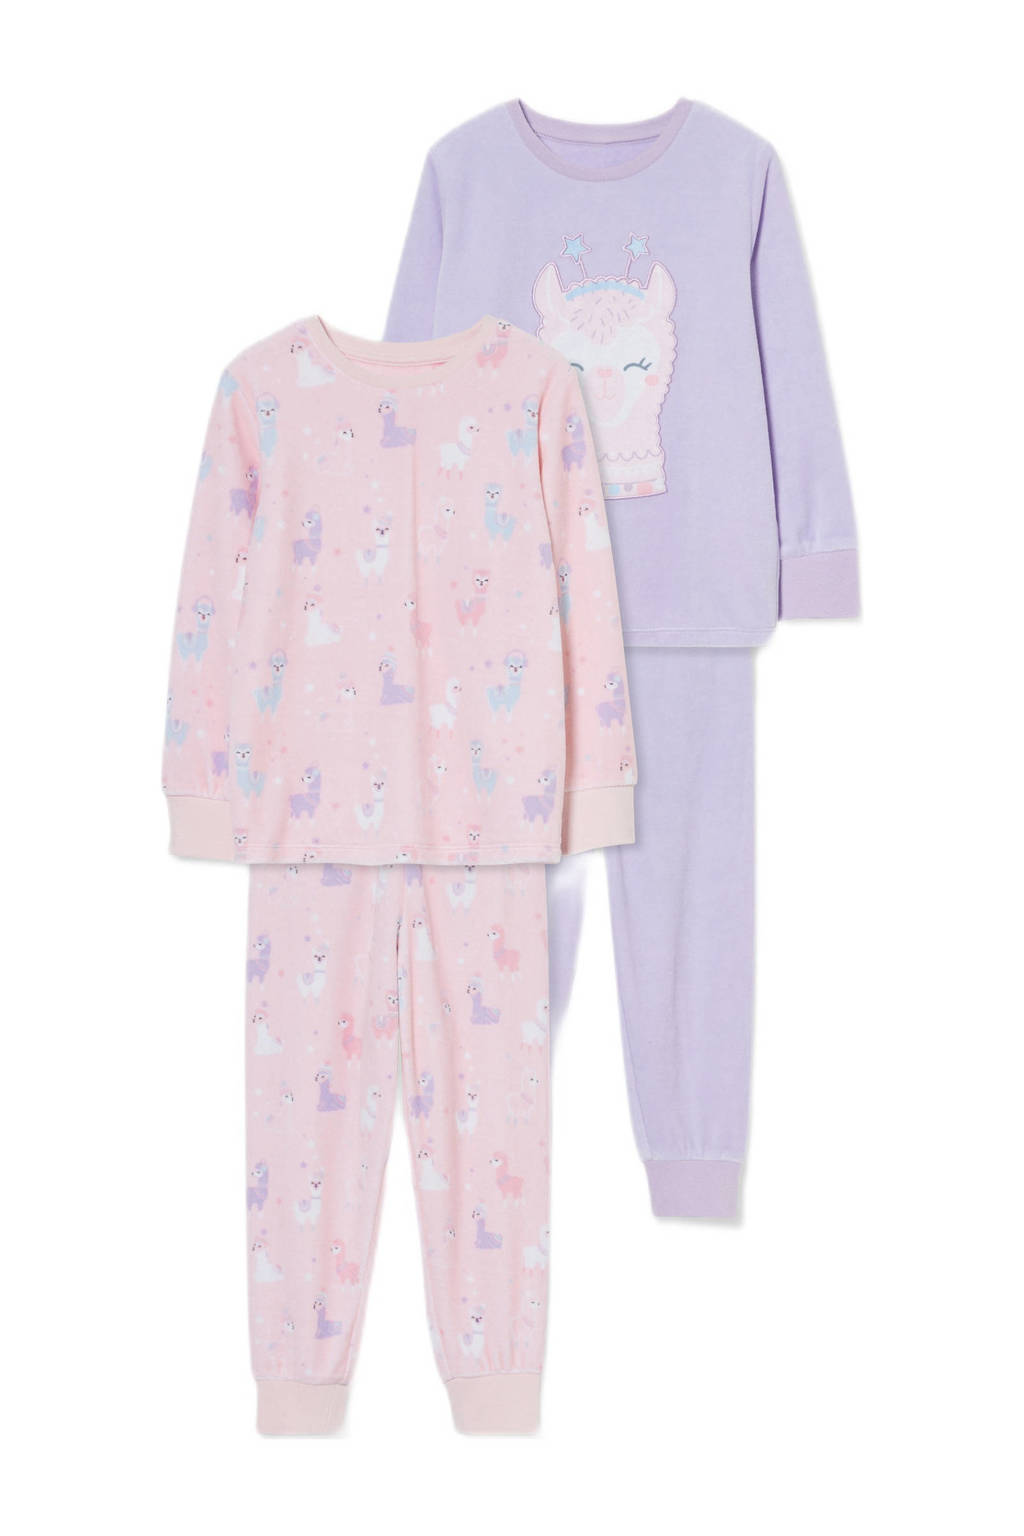 C&A pyjama - set van 2 roze/lila, Roze/lila